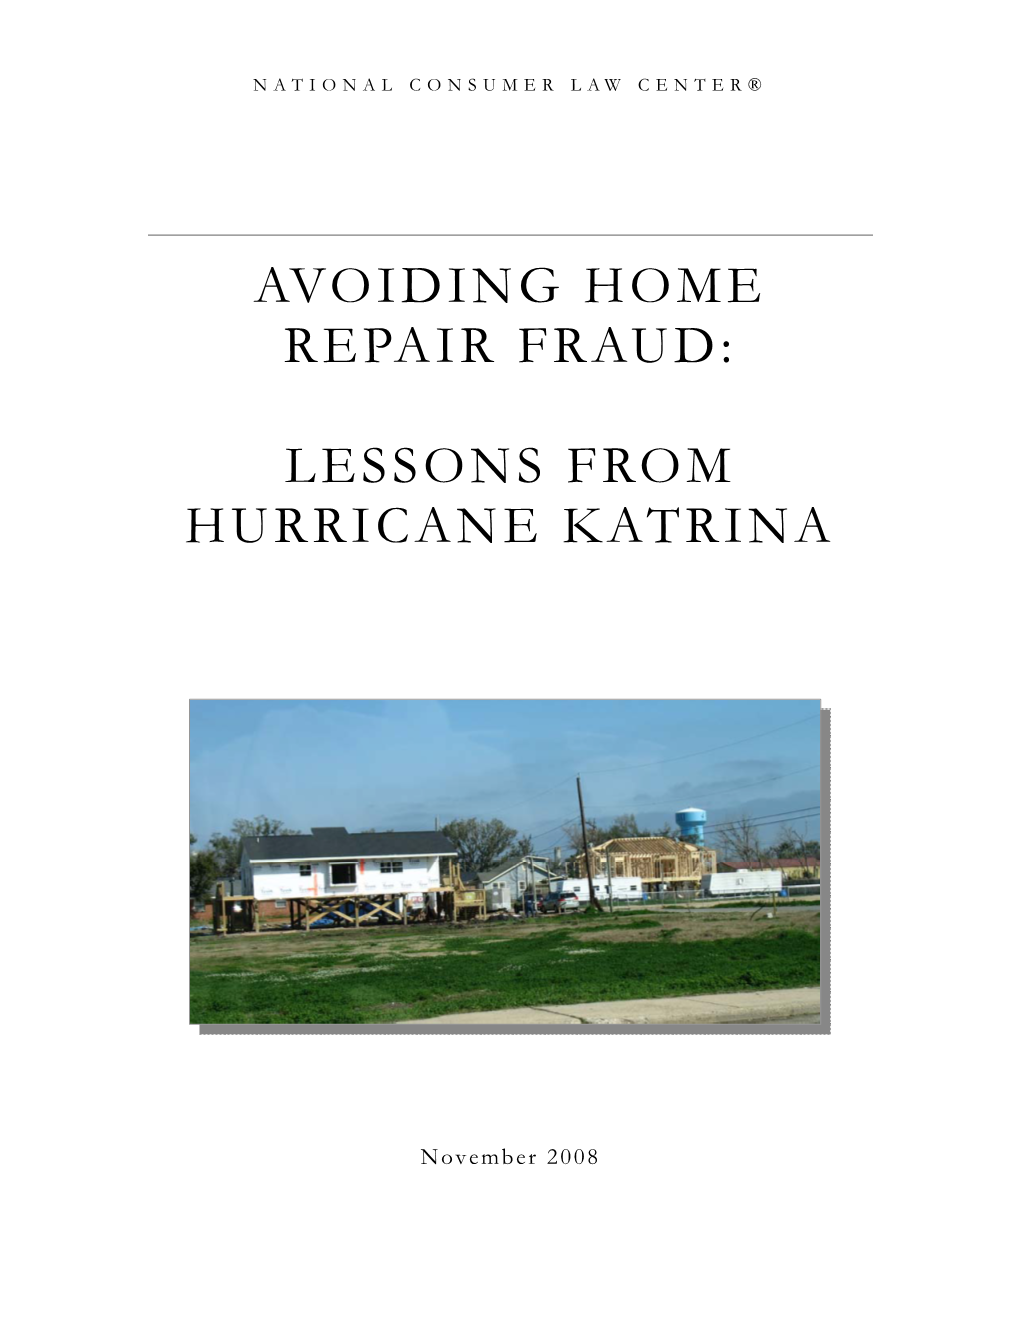 AVOIDING HOME REPAIR FRAUD: LESSONS from HURRICANE KATRINA by Rick Jurgens